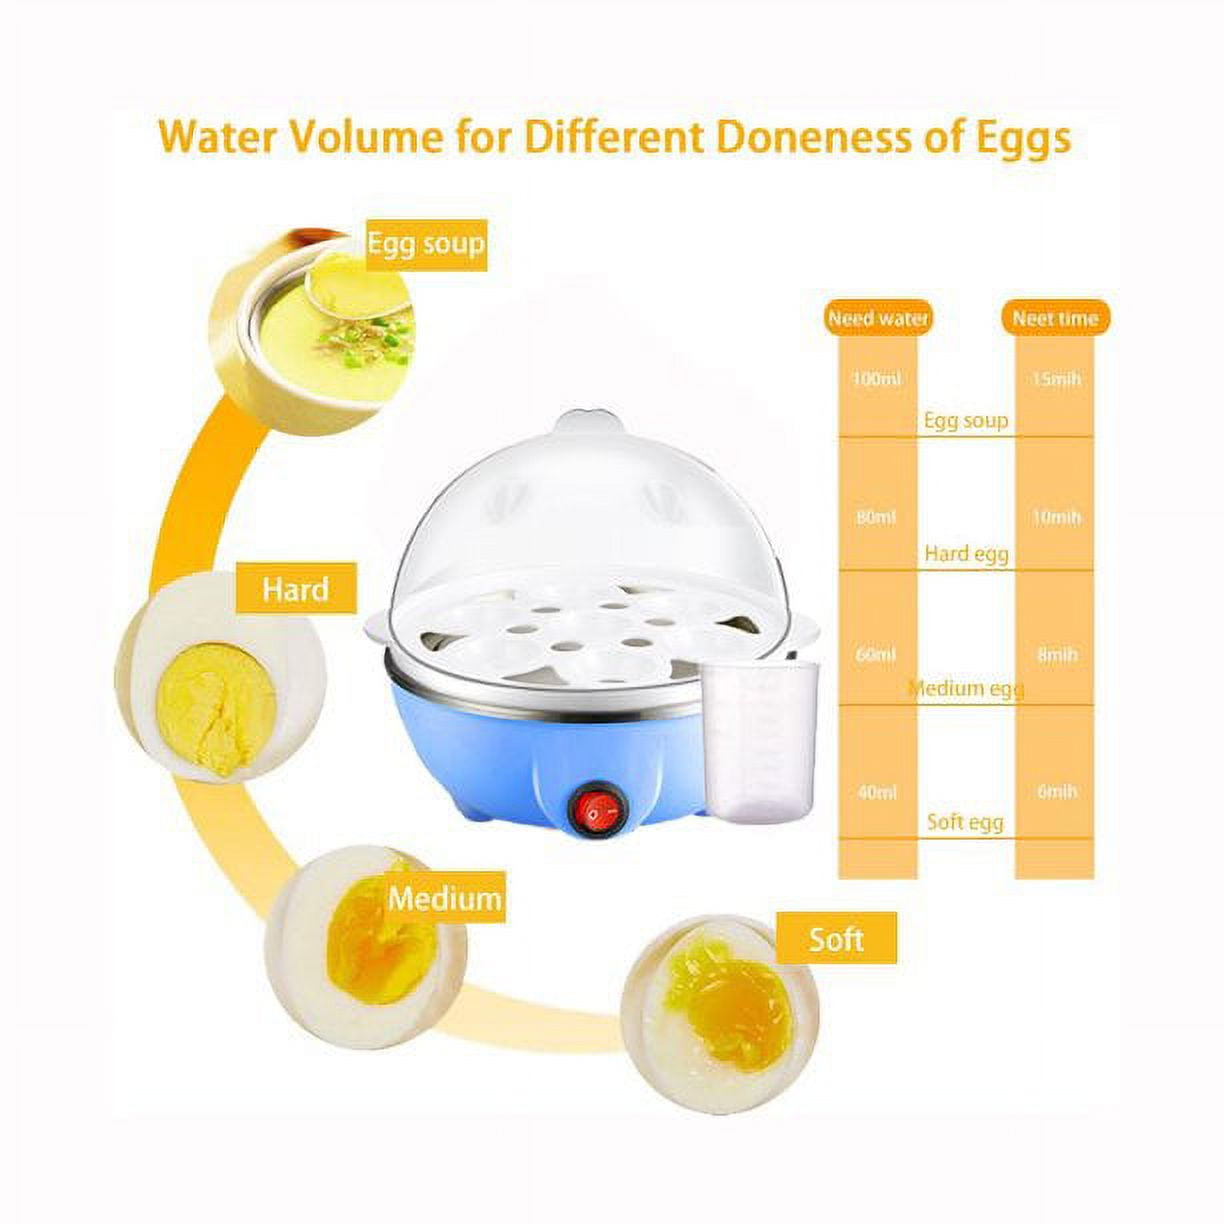 HAITRAL Electricity Egg Boiler, Rapid Egg Cooker, 7 Egg Capacity, Egg –  Oberon Distribution